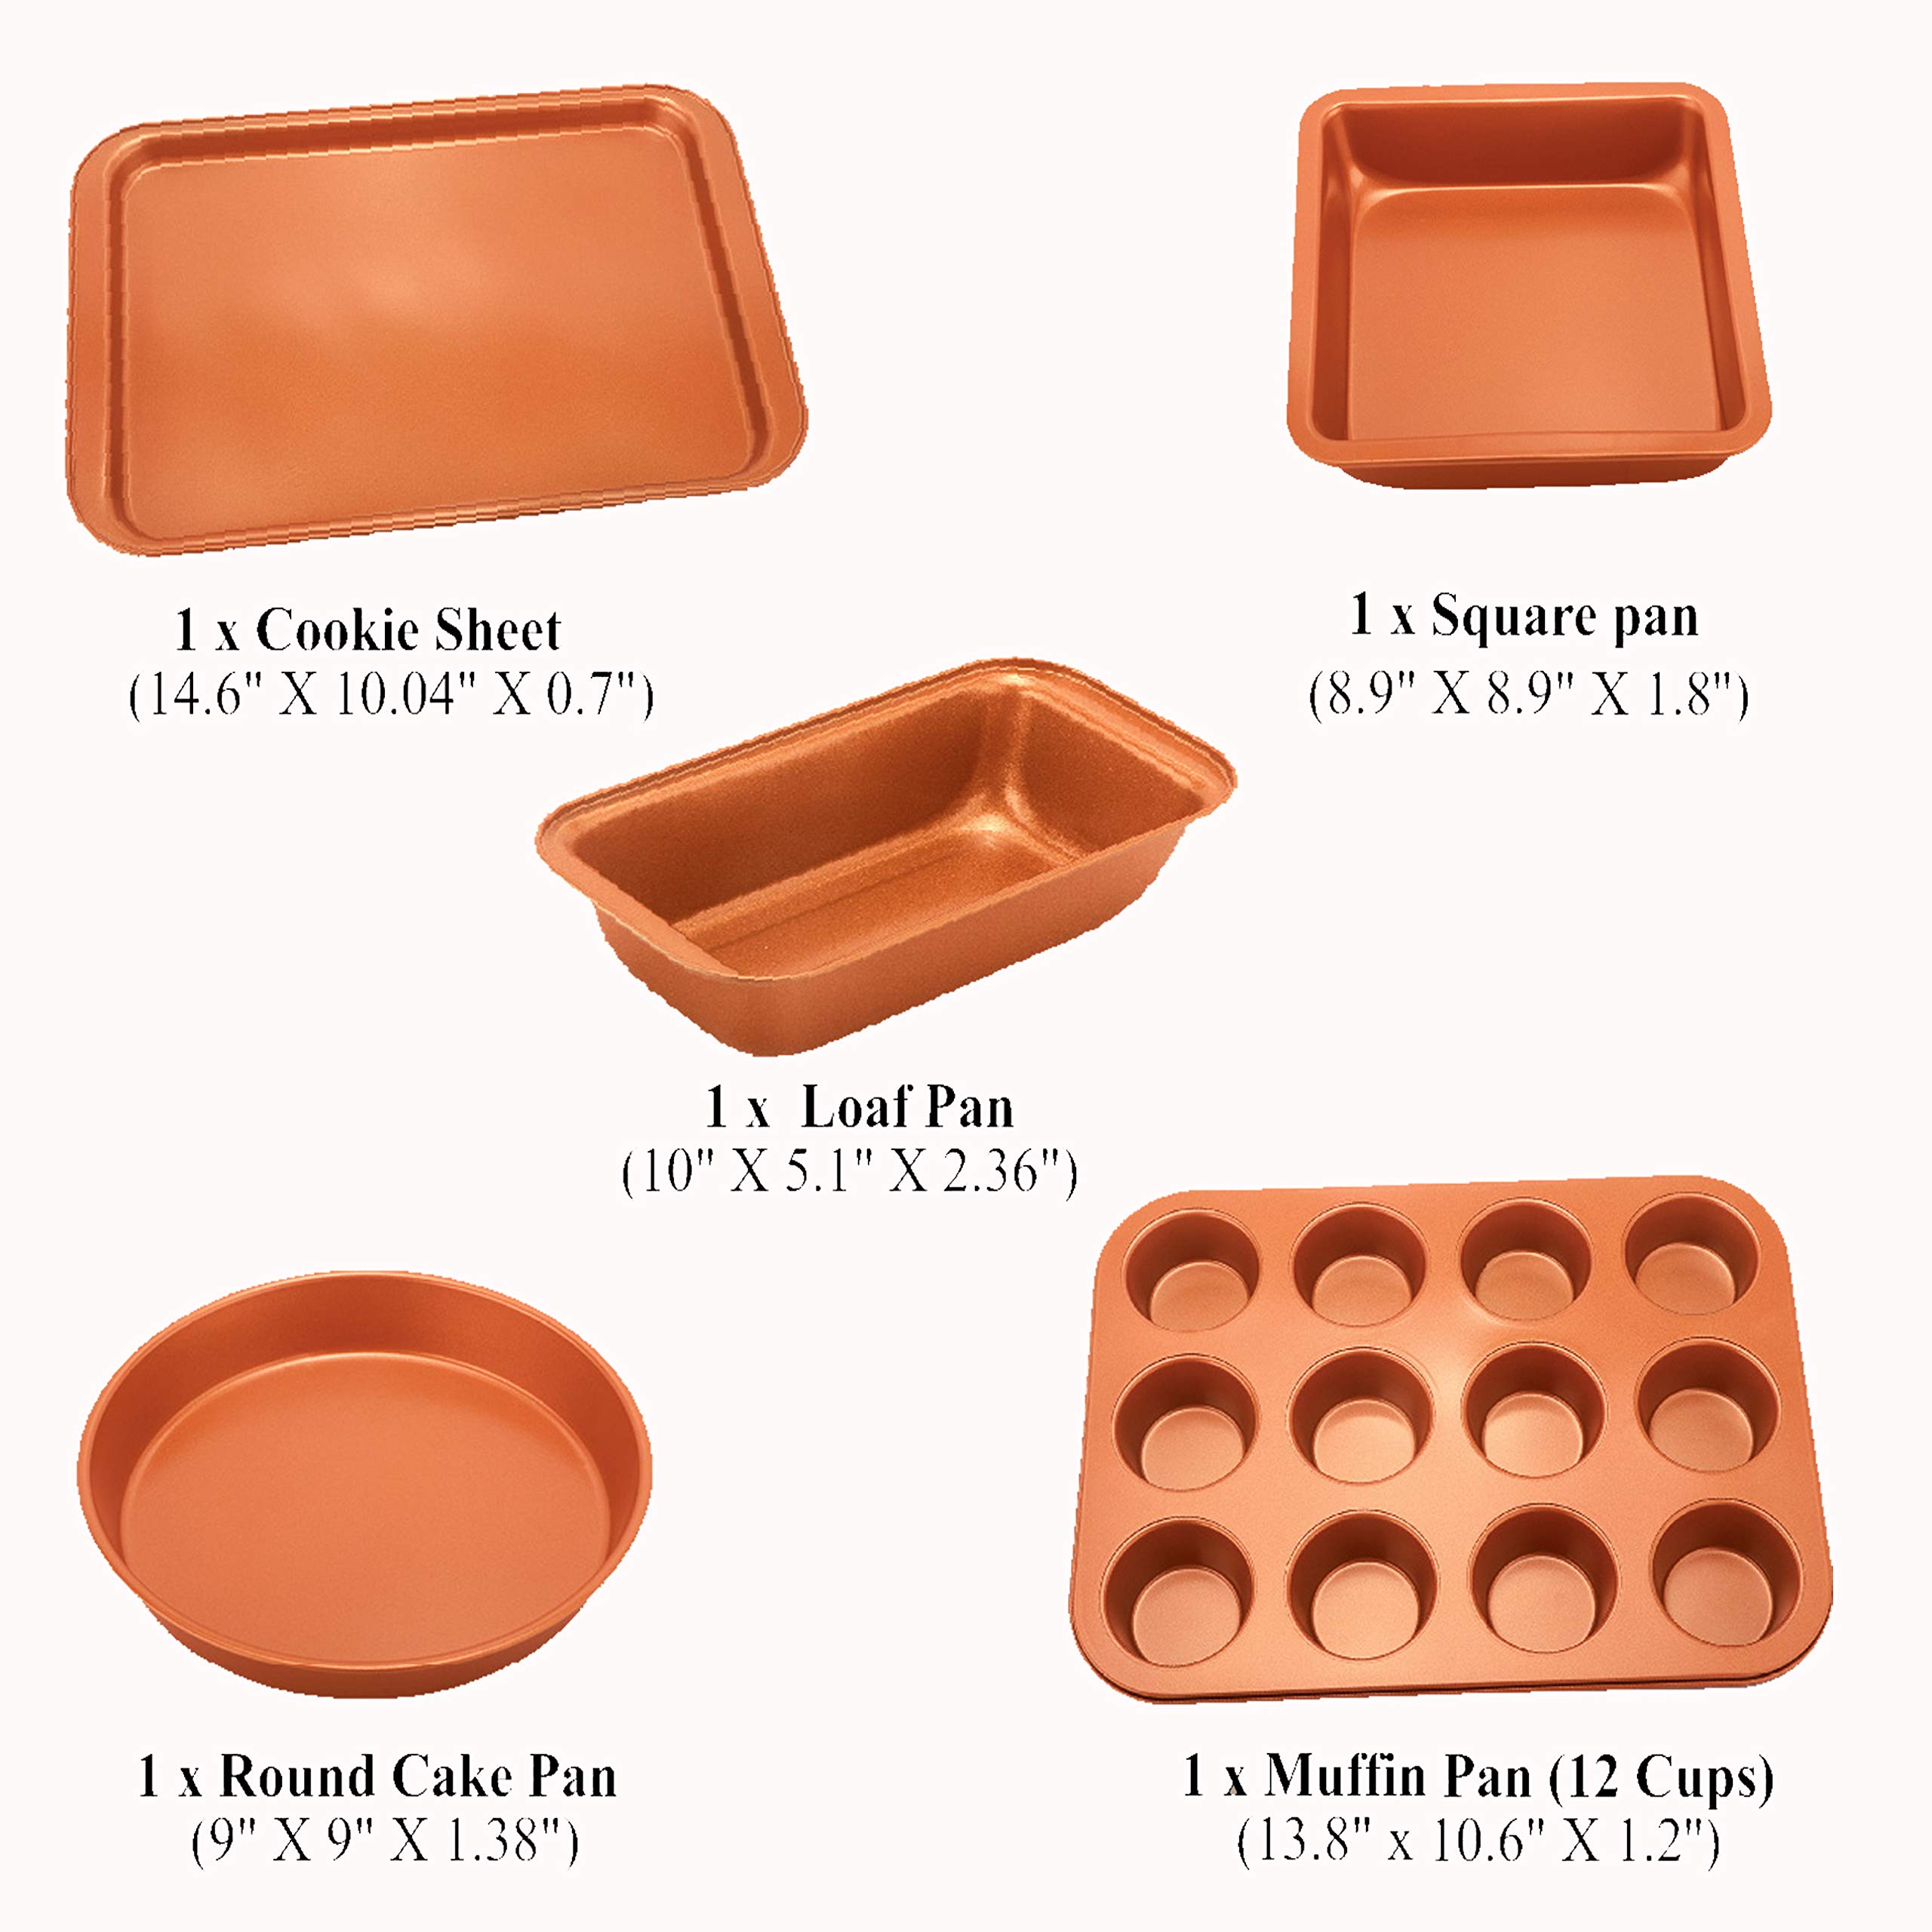 CopperKitchen 5 pcs Baking Pans - Organic Eco Friendly Nonstick Coating - Premium Quality - Muffin Pan, Loaf Pan, Square Pan, Cookie Sheet, Round Pan - Bakeware Set